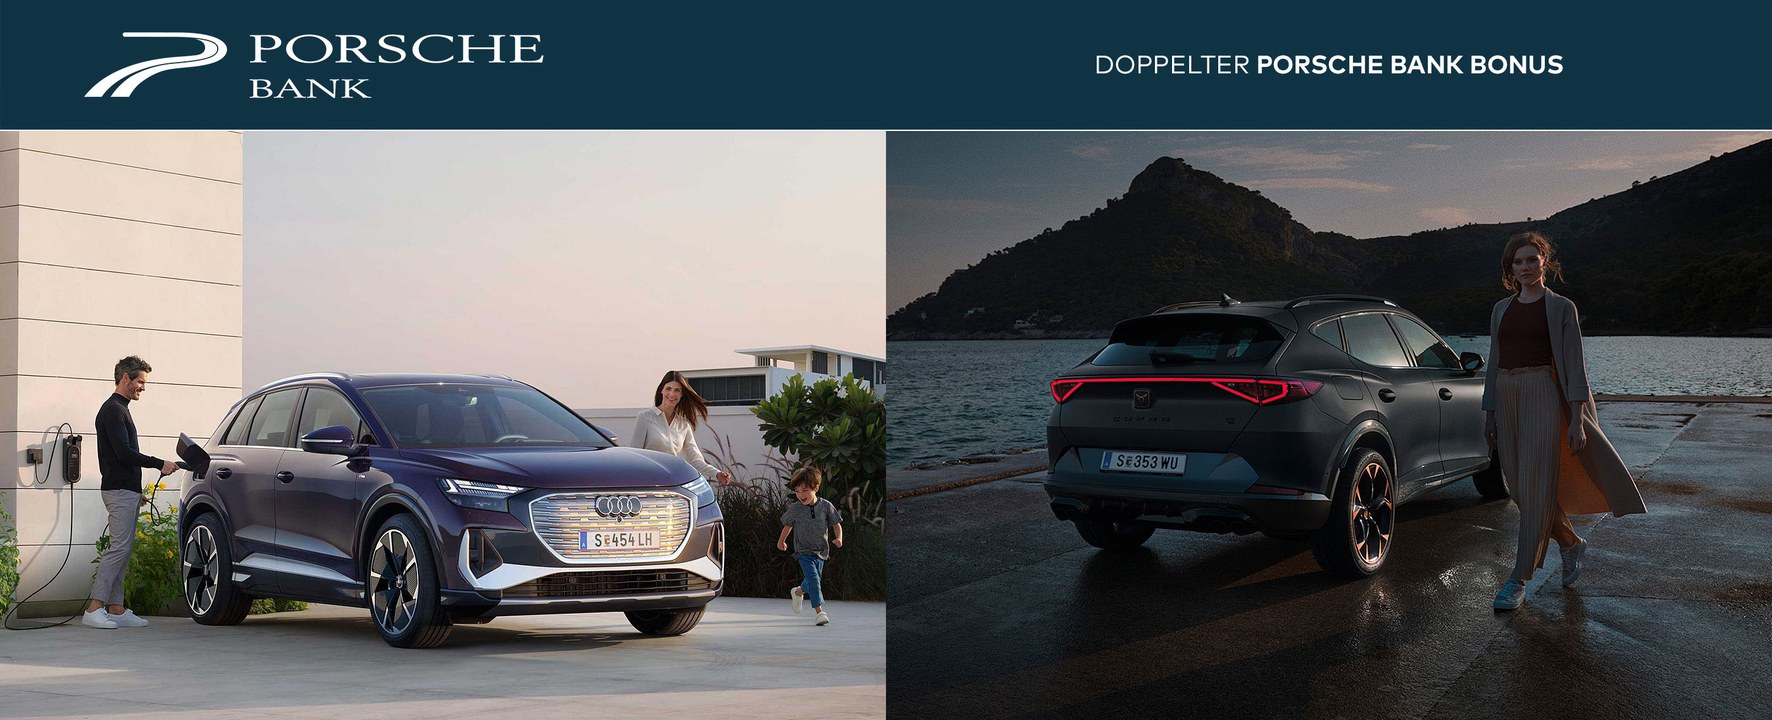 Image of Doppelter Porsche Bank Bonus